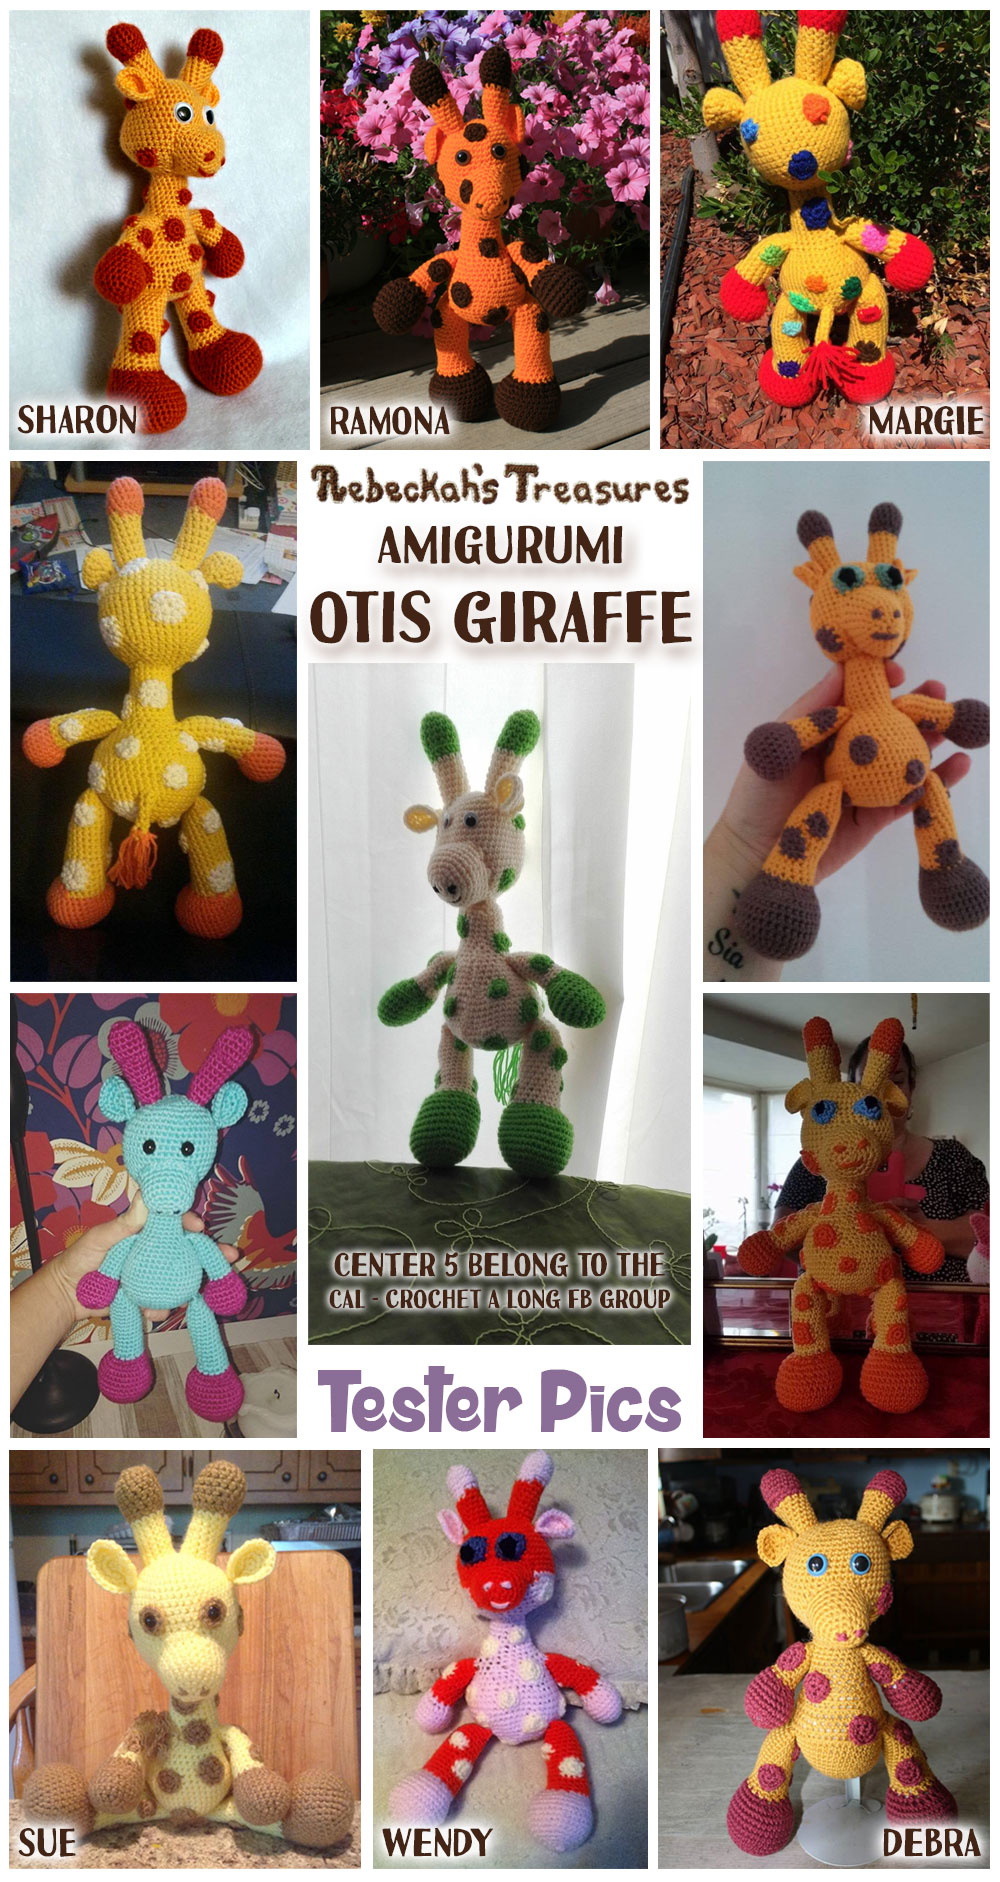 #Otis #Giraffe - #Amigurumi Crochet-A-Long by @beckastreasures | #OtisGiraffeCAL TESTER Collage with 5 CAL - Crochet A Long FB Group Testers & 6 #RebeckahsTreasures Testers including, #DebraC #MargieE #RamonaK #SharonE #SueB and #WendyB | #crochet #pattern #April #YouTube #CAL